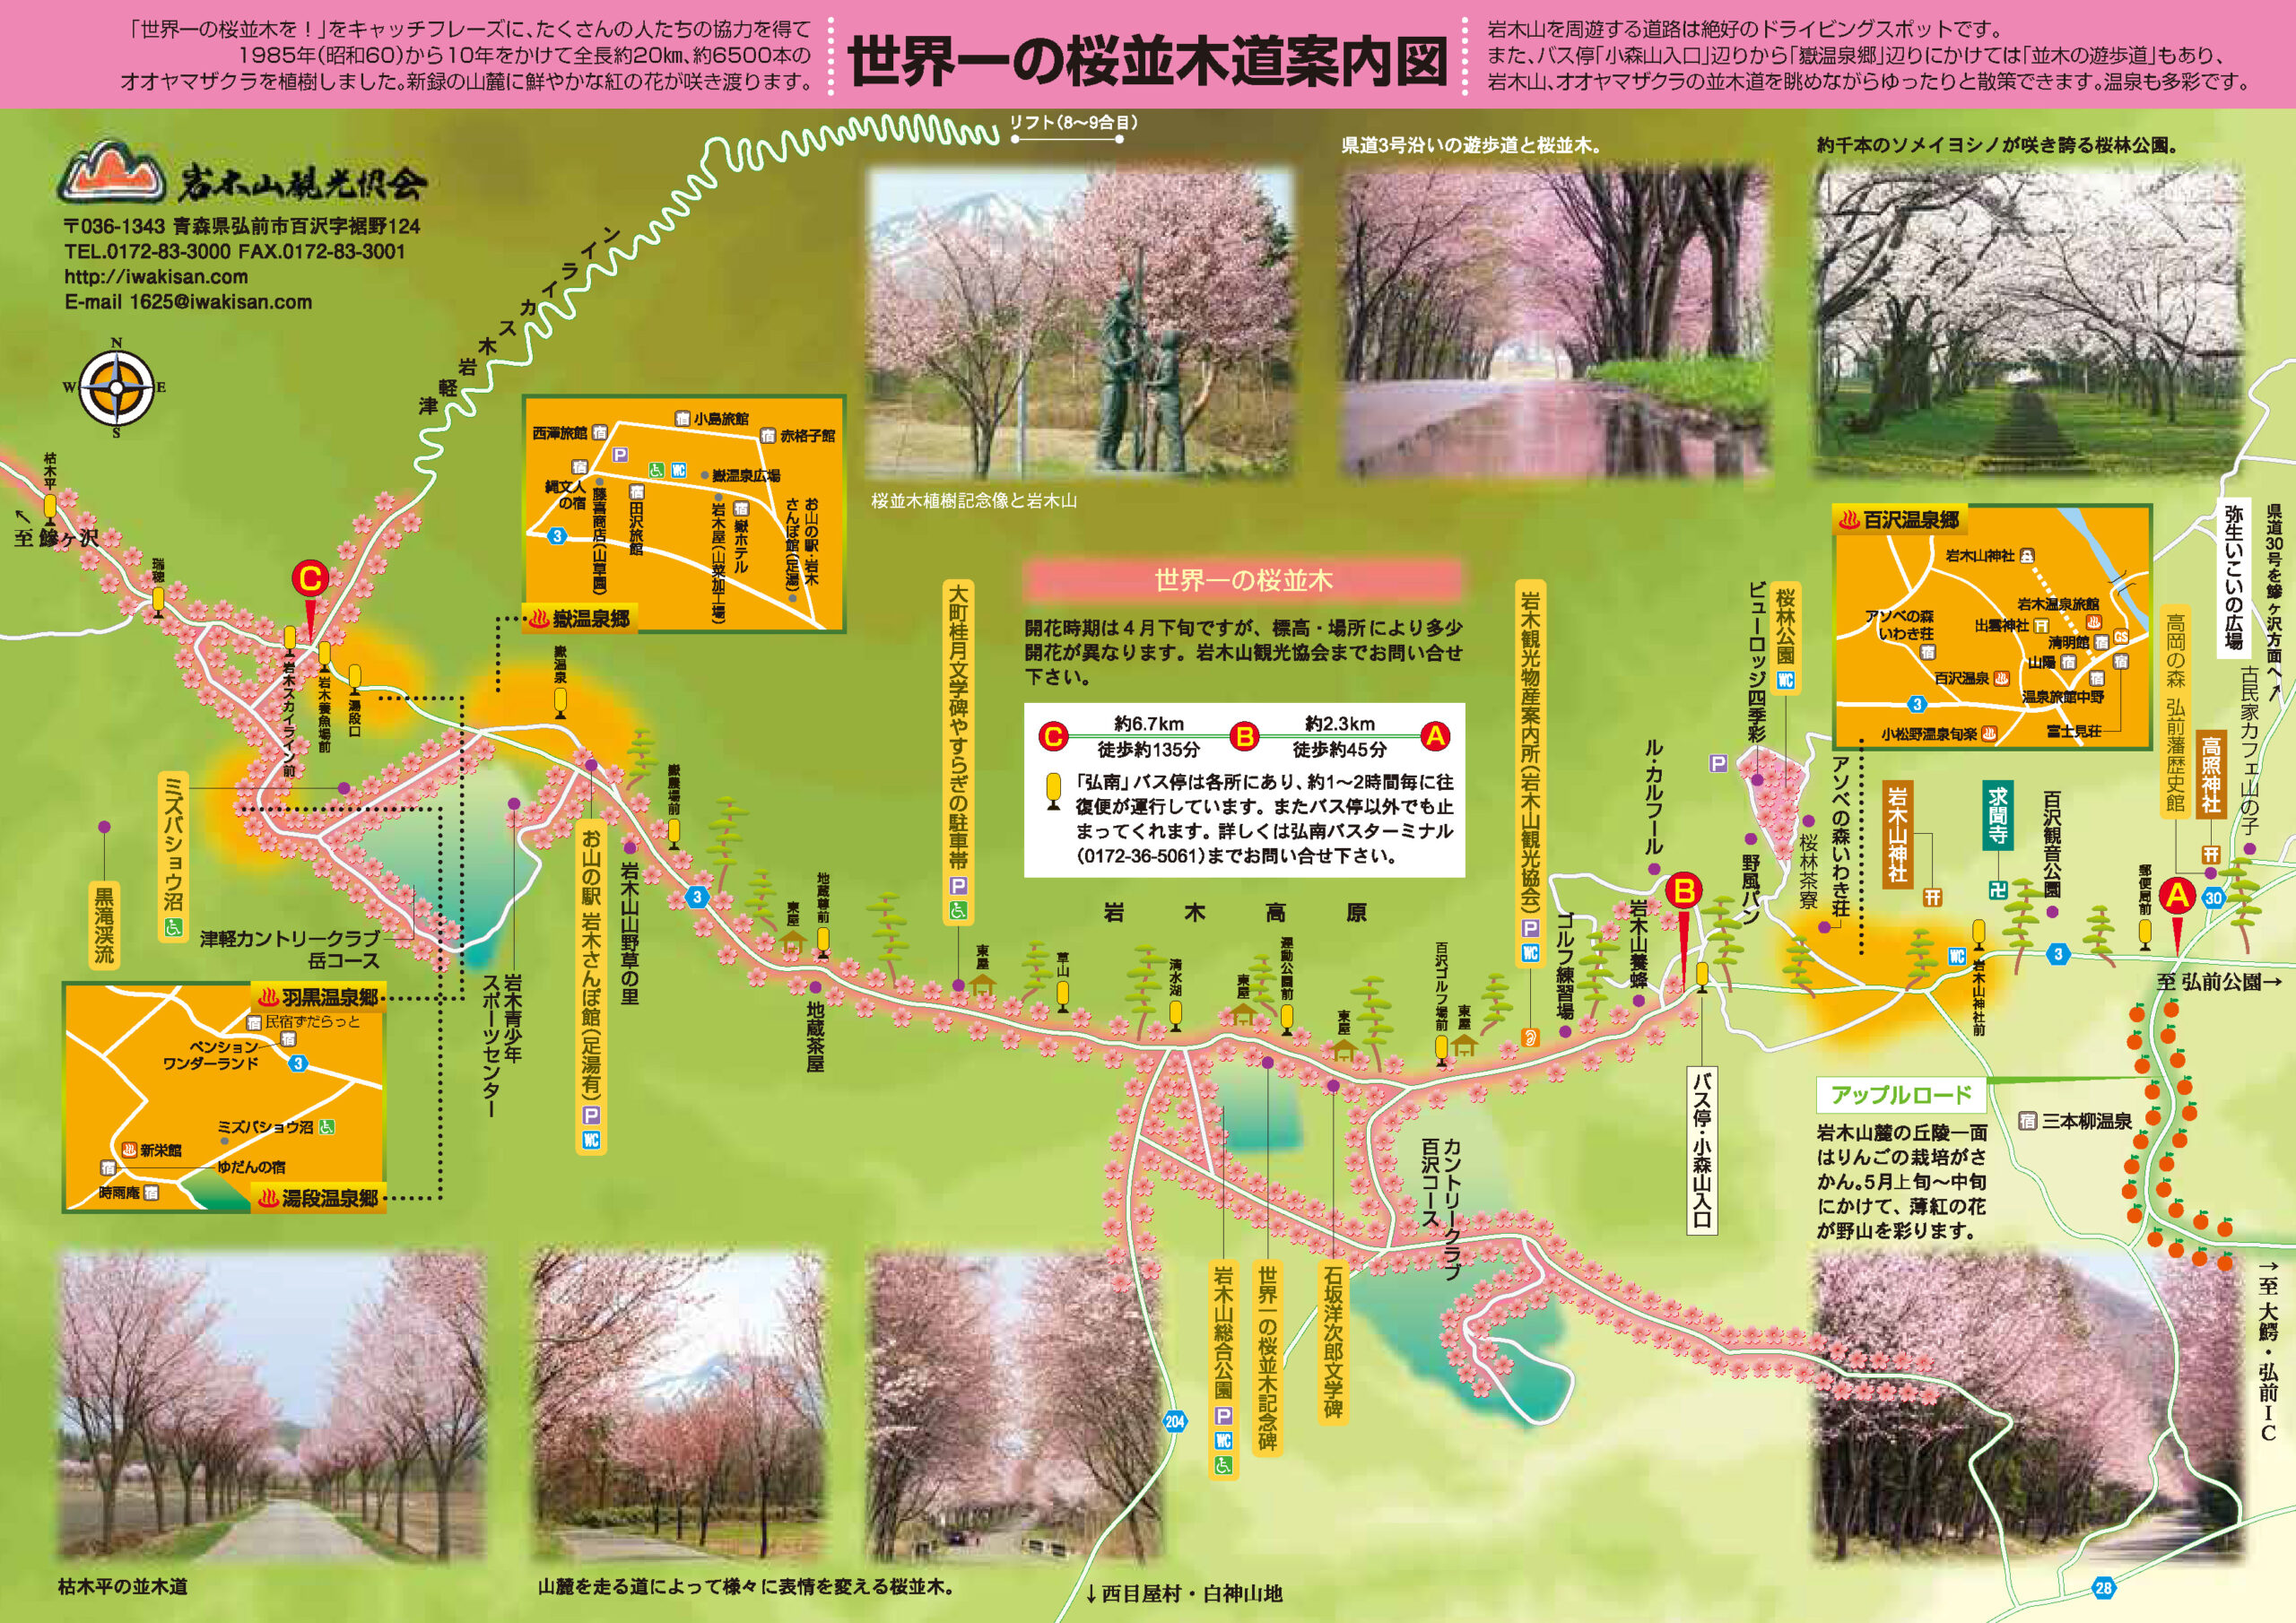 世界一の桜並木道案内